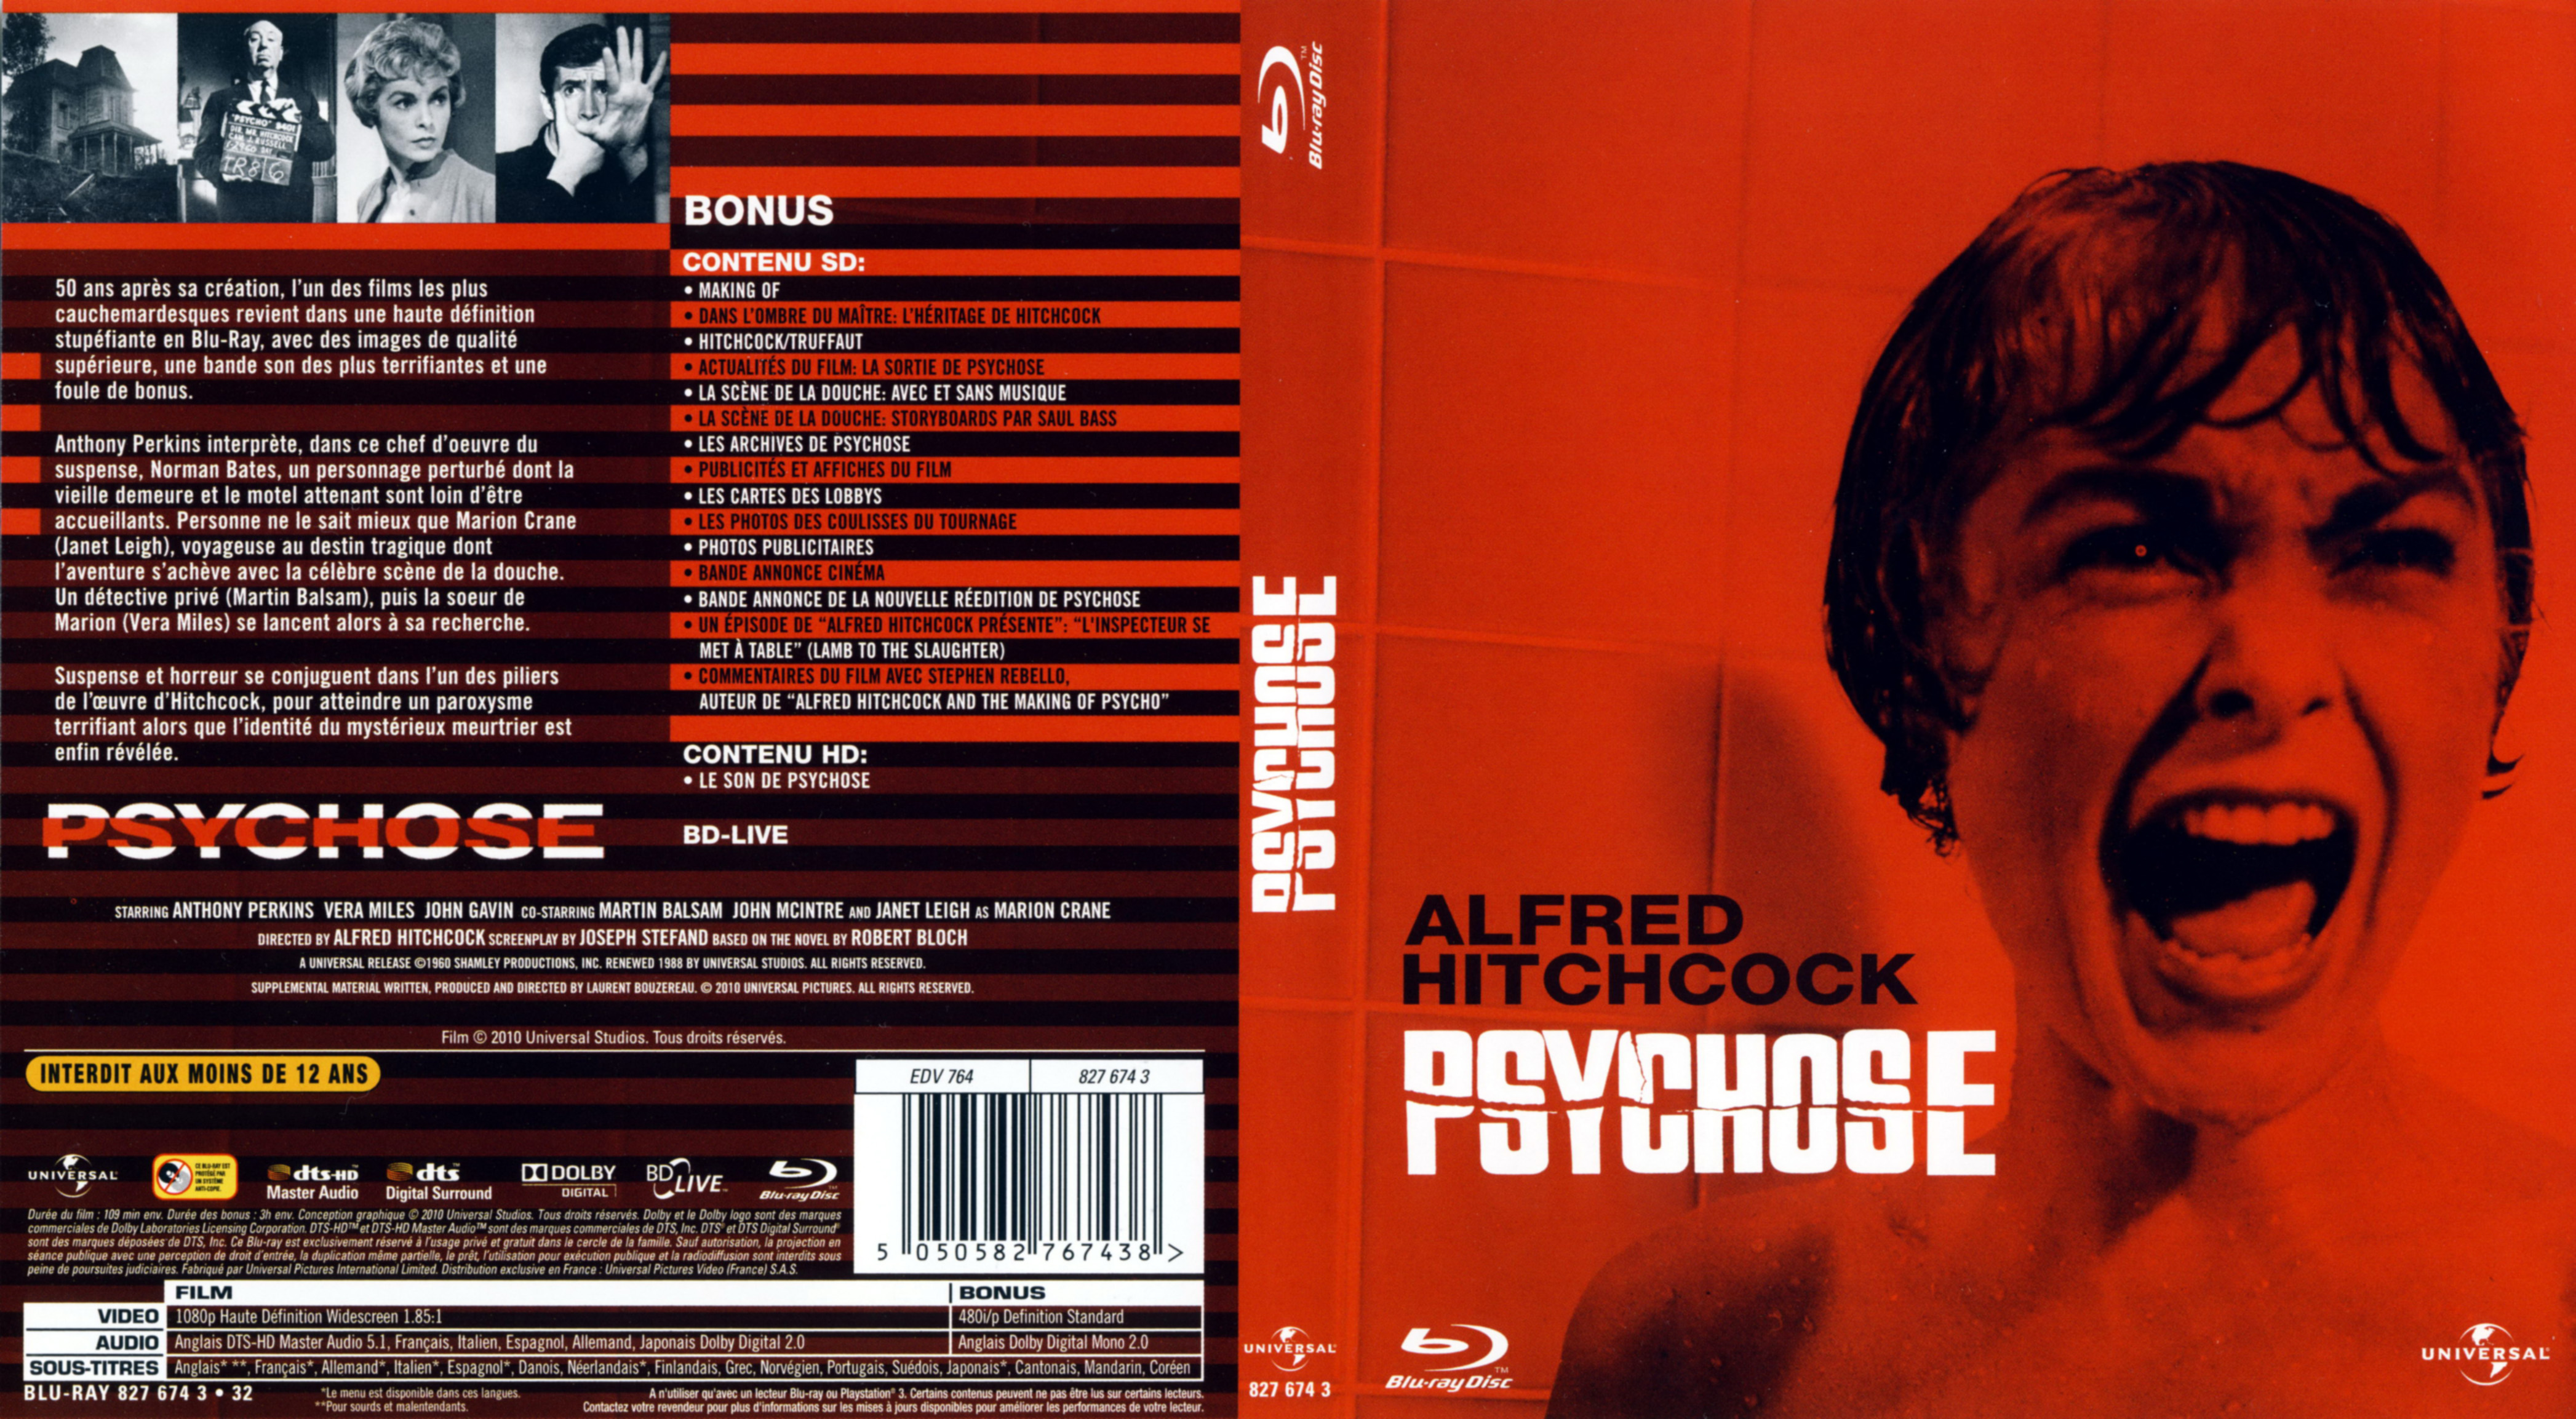 Jaquette DVD Psychose (BLU-RAY)